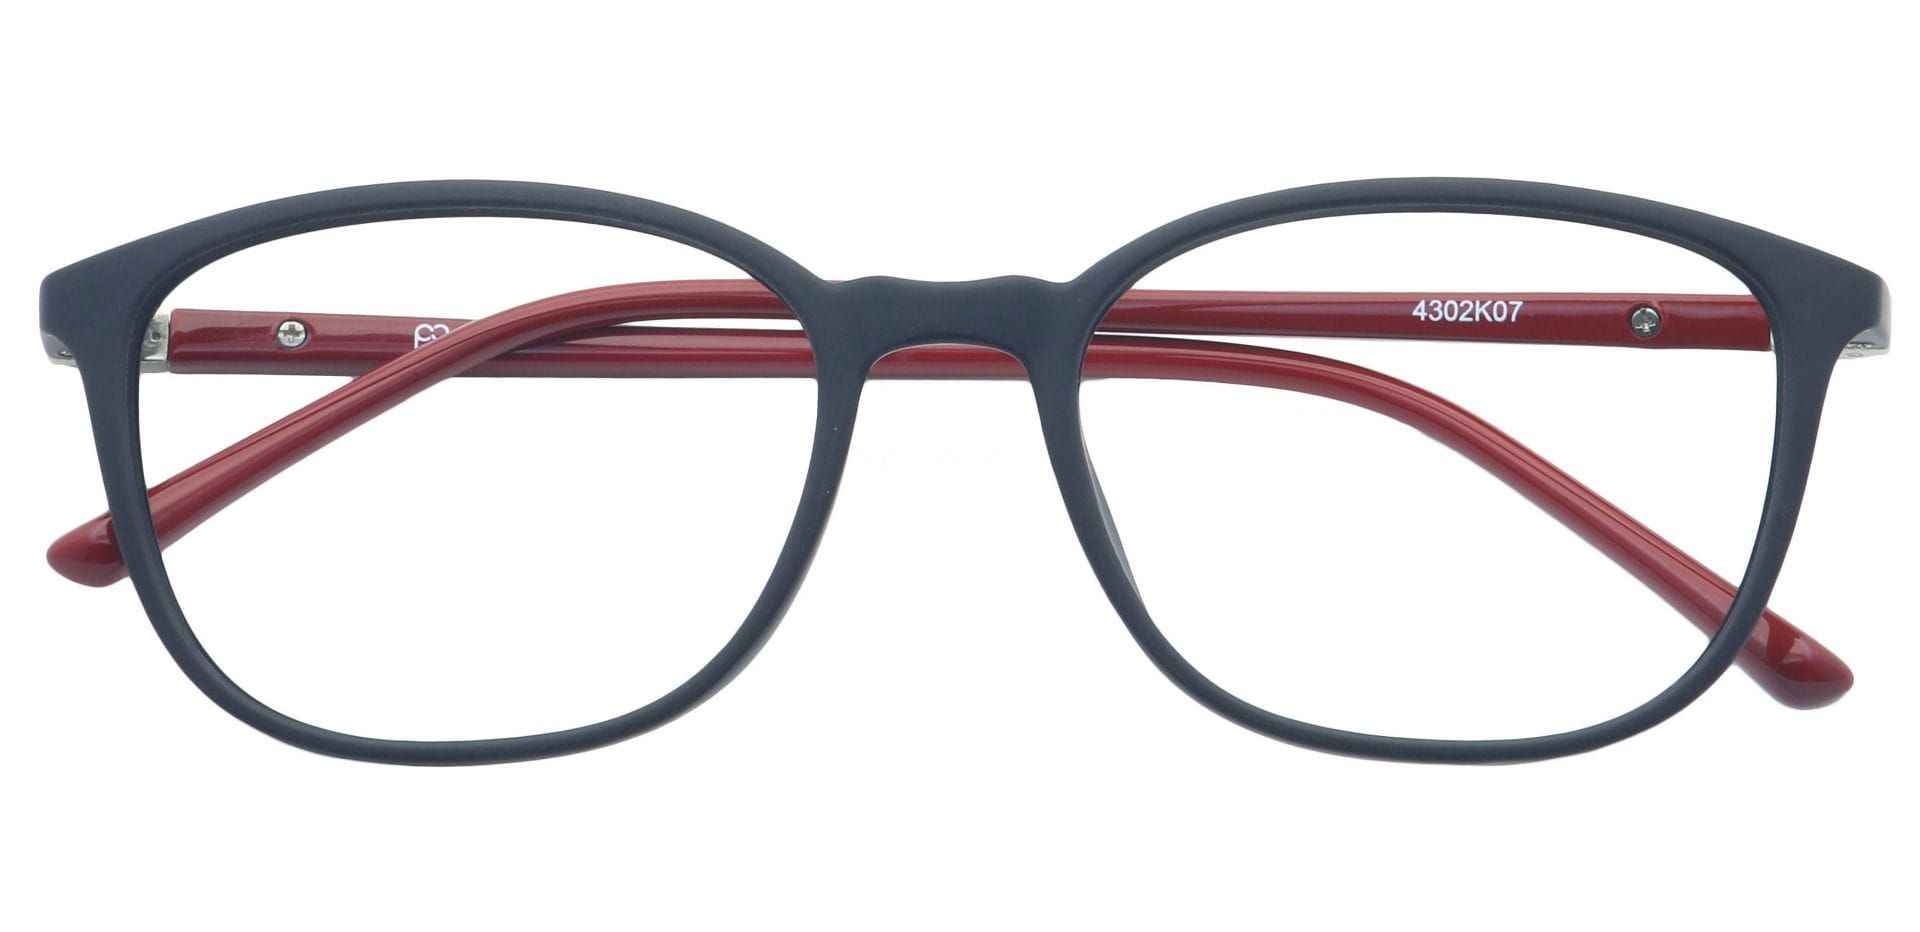 Karleen Oval Lined Bifocal Glasses - Black